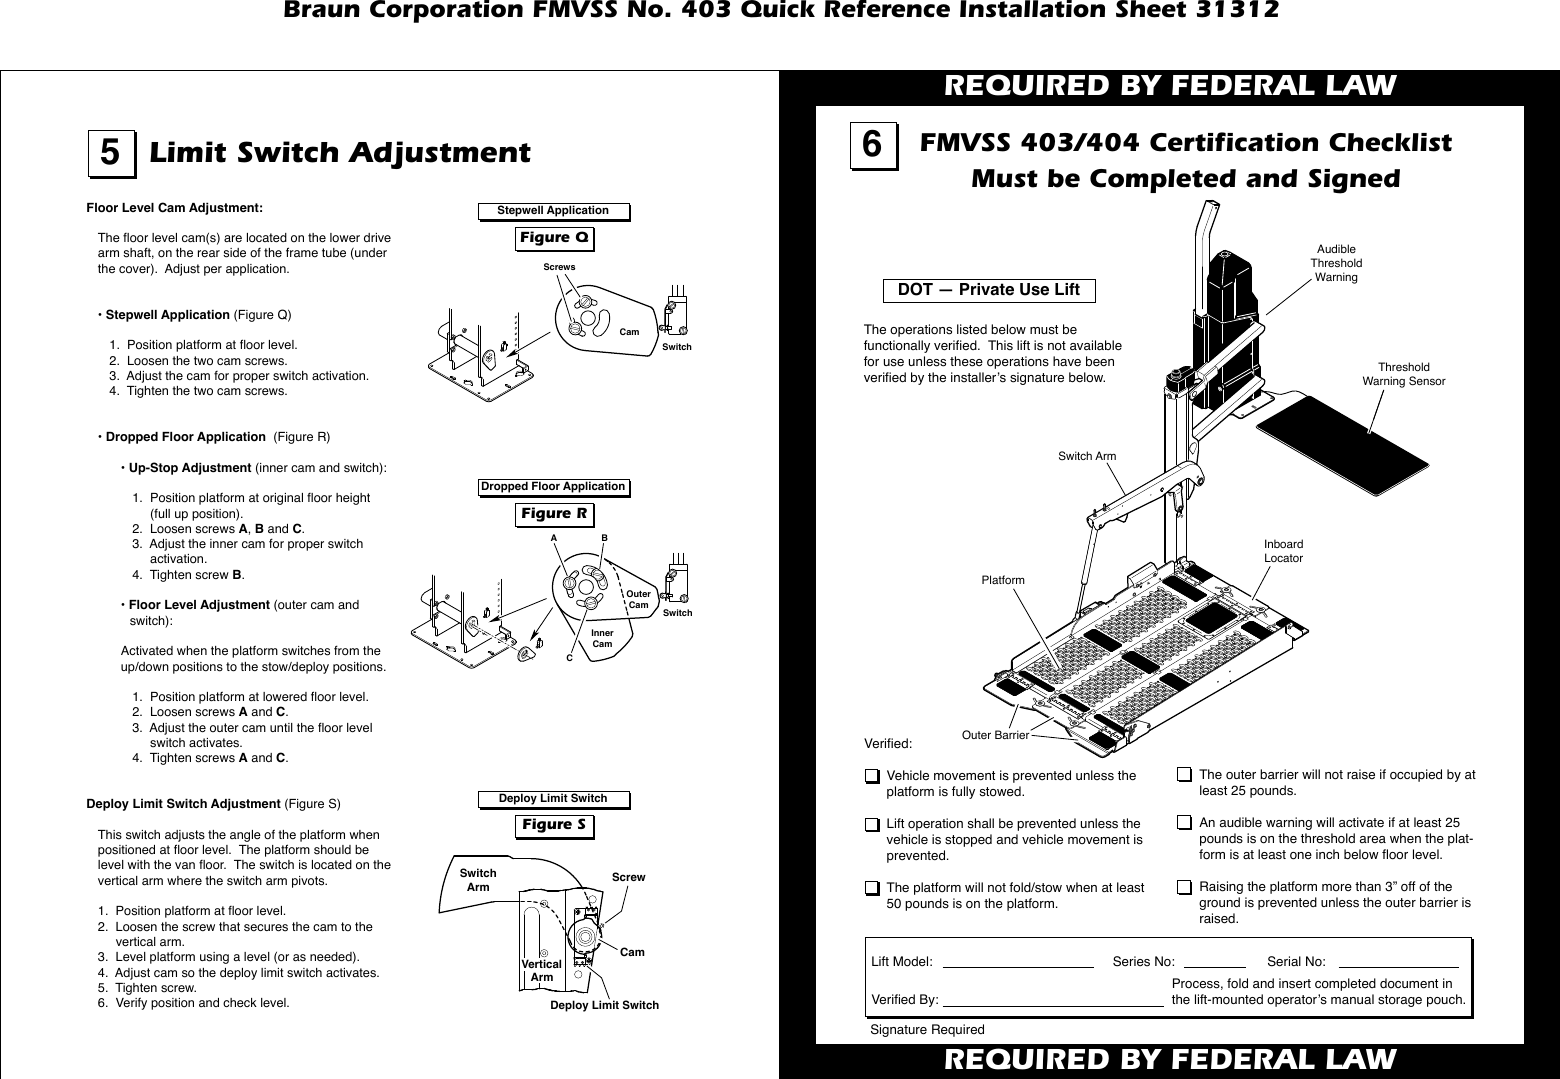 Page 4 of 8 - Braun Braun-Corporation-Fmvss-No-403-403-Users-Manual-  Braun-corporation-fmvss-no-403-403-users-manual